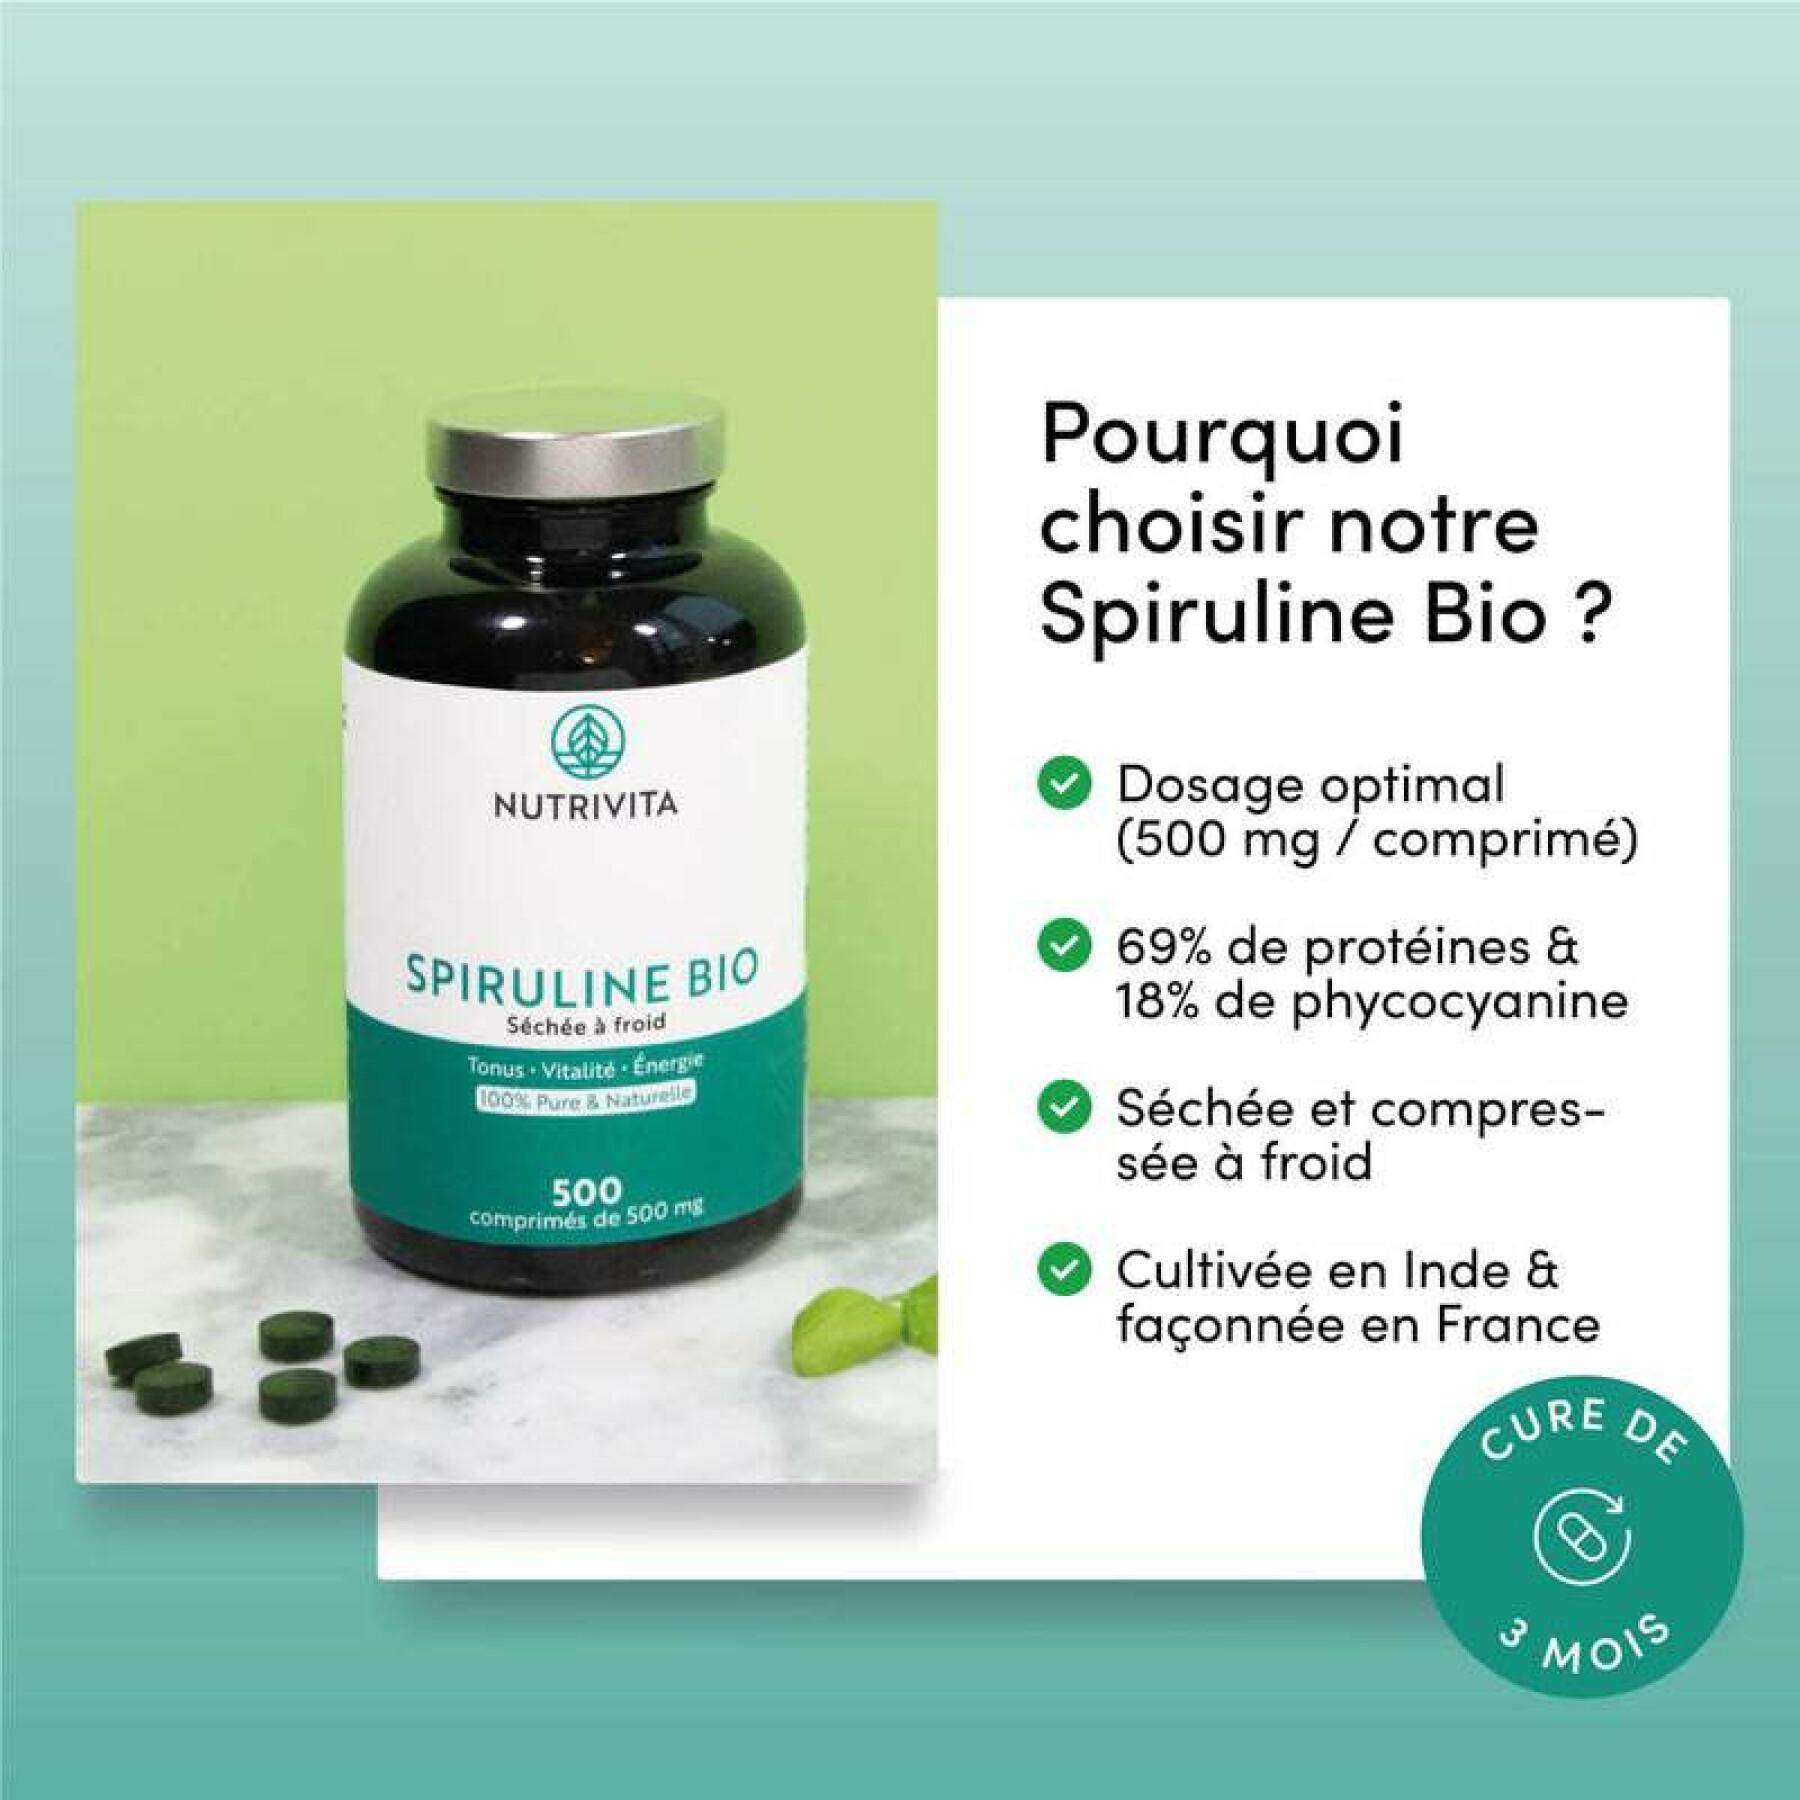 Suplemento alimentar orgânico da Spirulina - 500 comprimidos Nutrivita